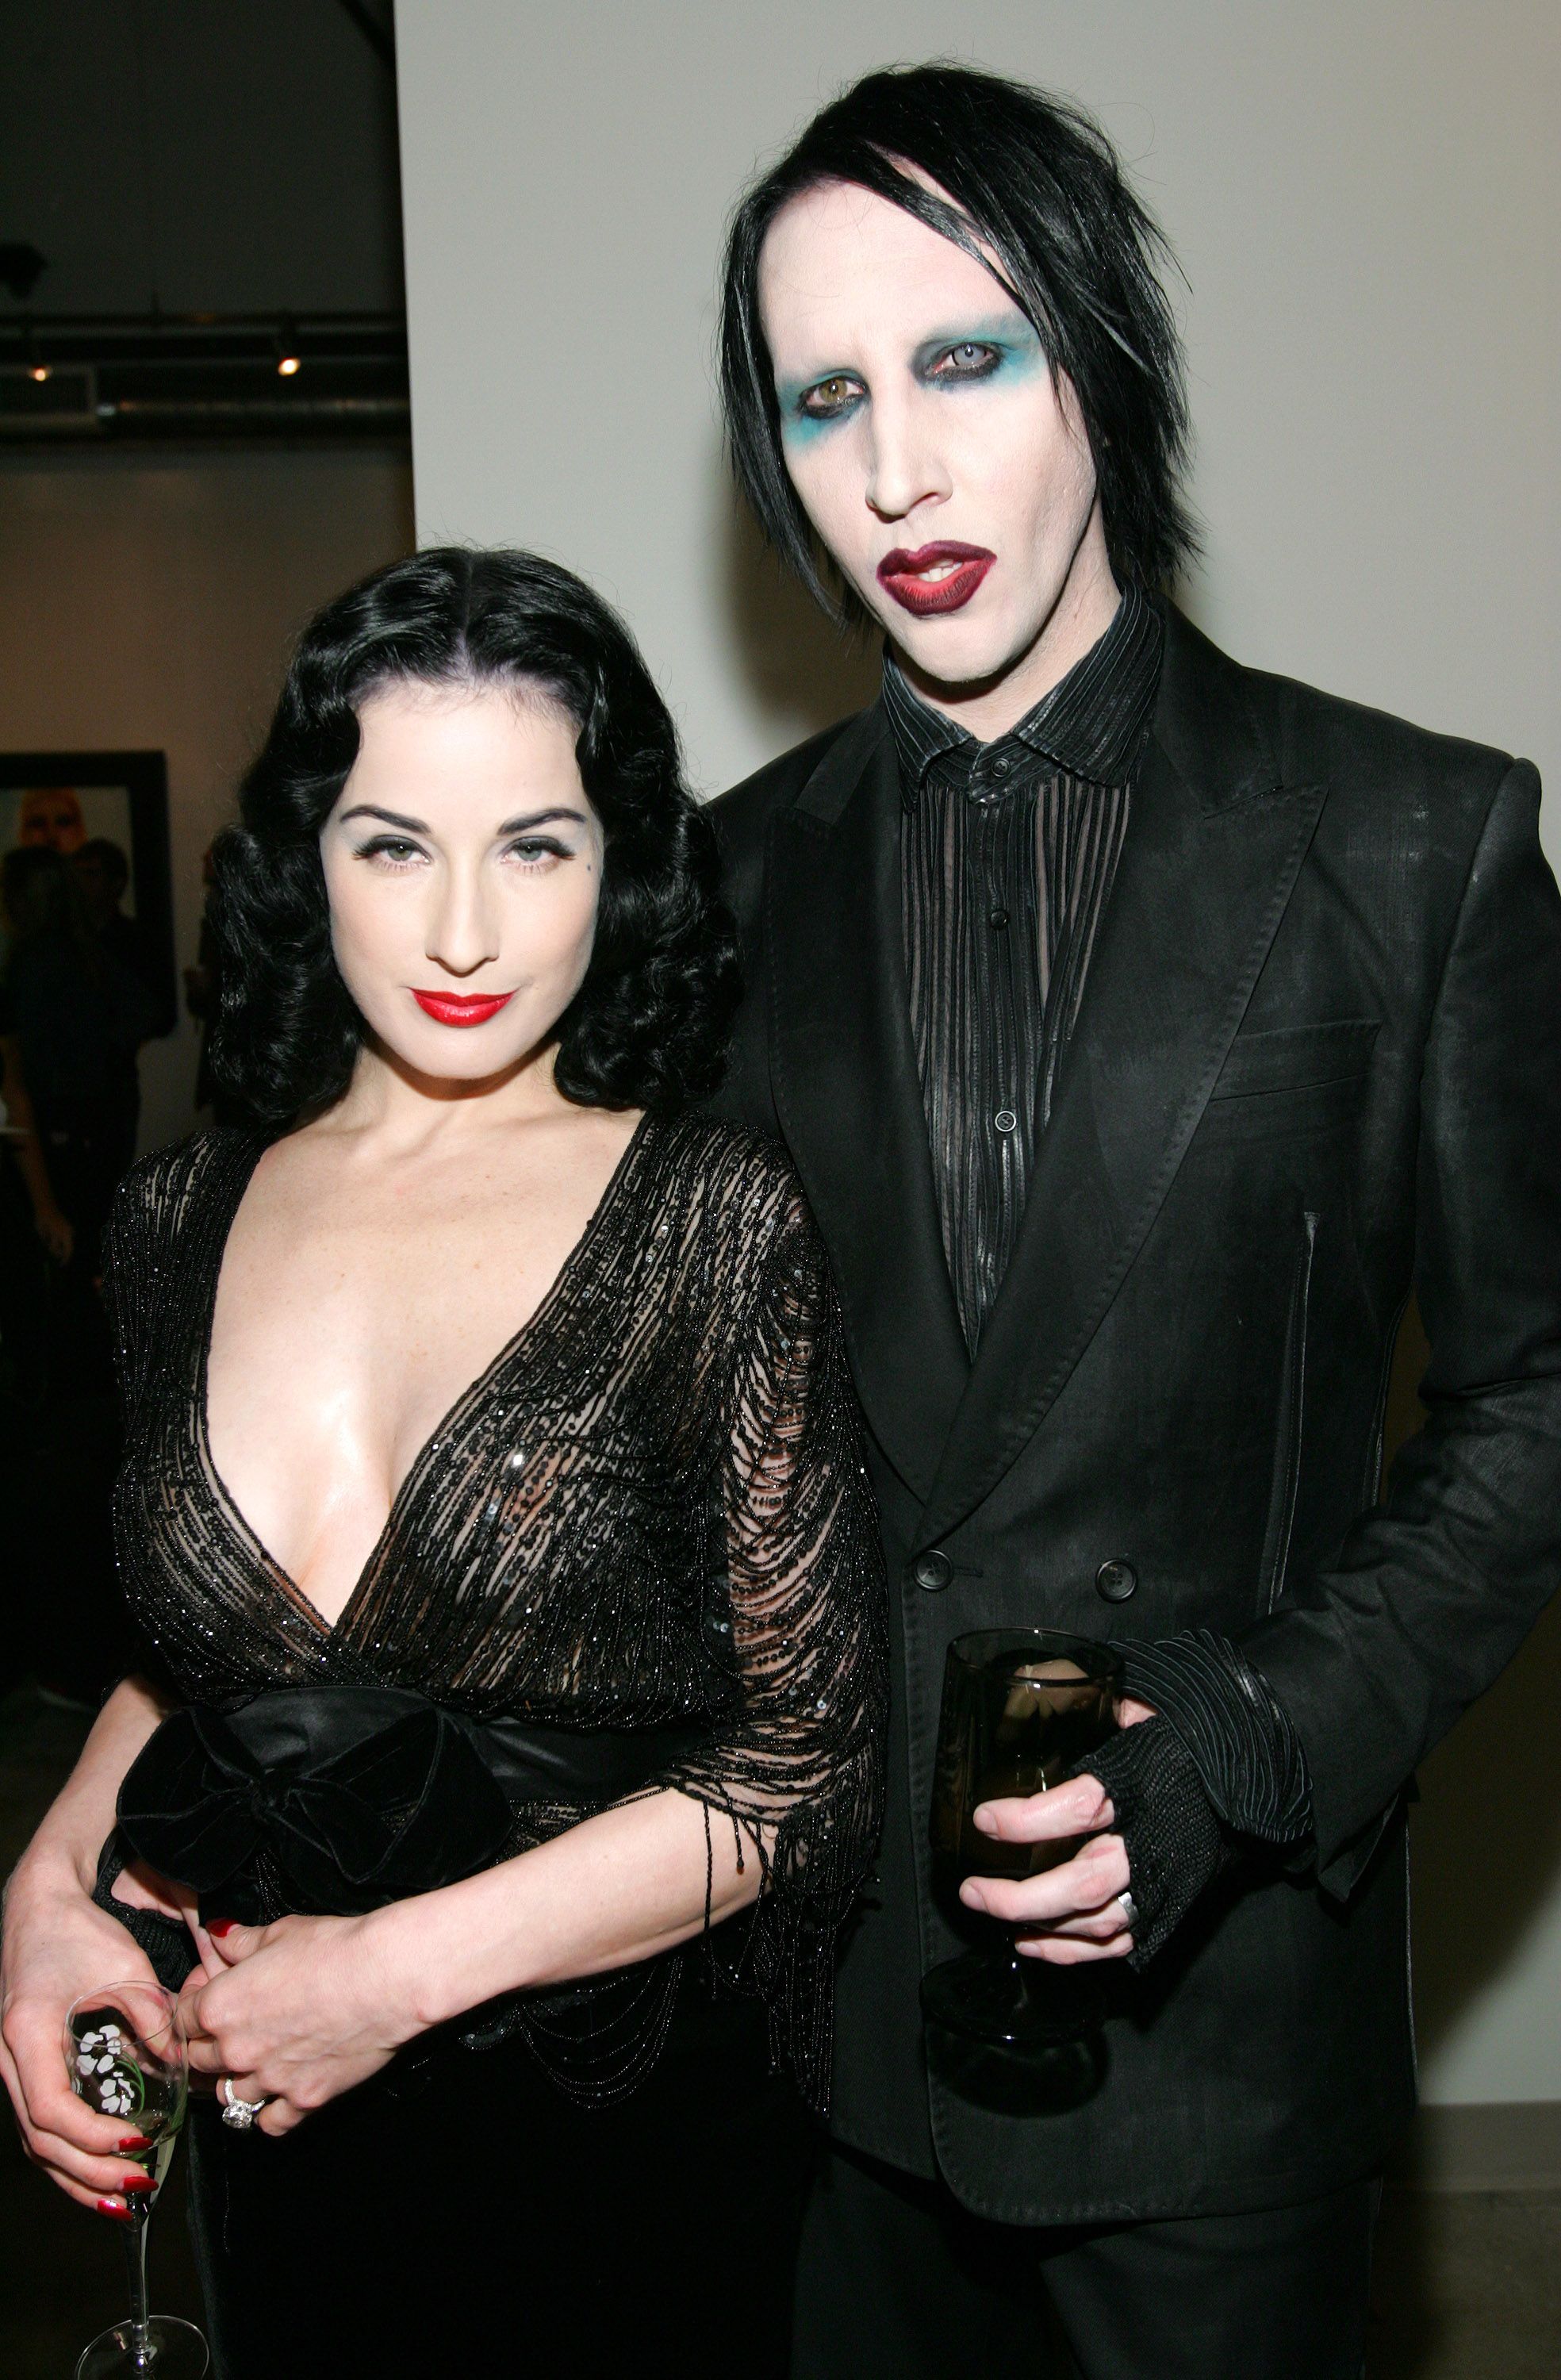 TBT Karolina Kurkova as Marilyn Manson in True Goth Style